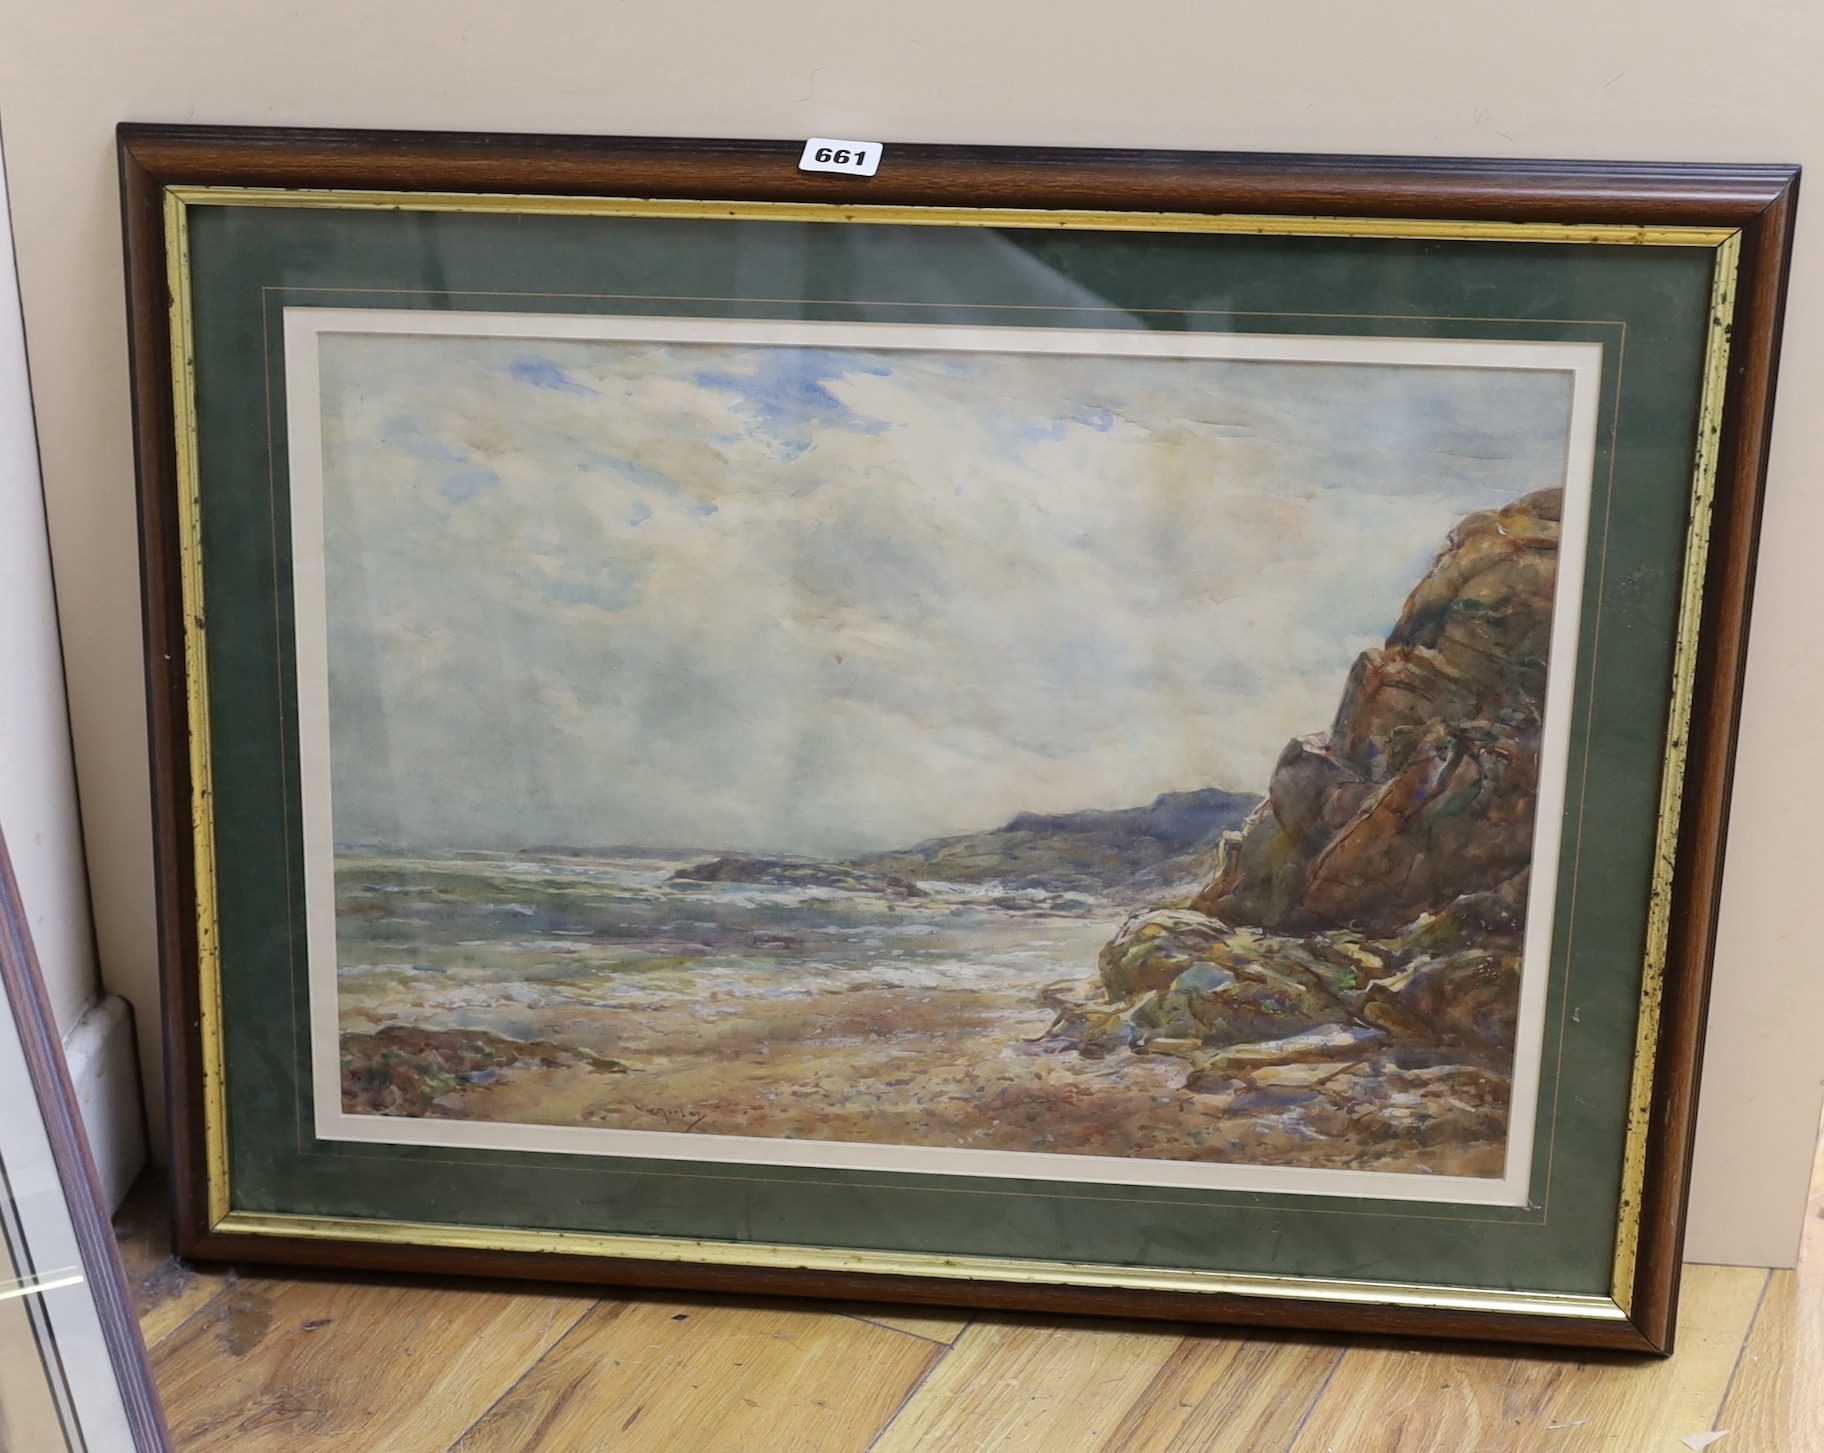 Thomas William Morley (1859-1925), watercolour, Beach scene, signed, 36 x 52cm